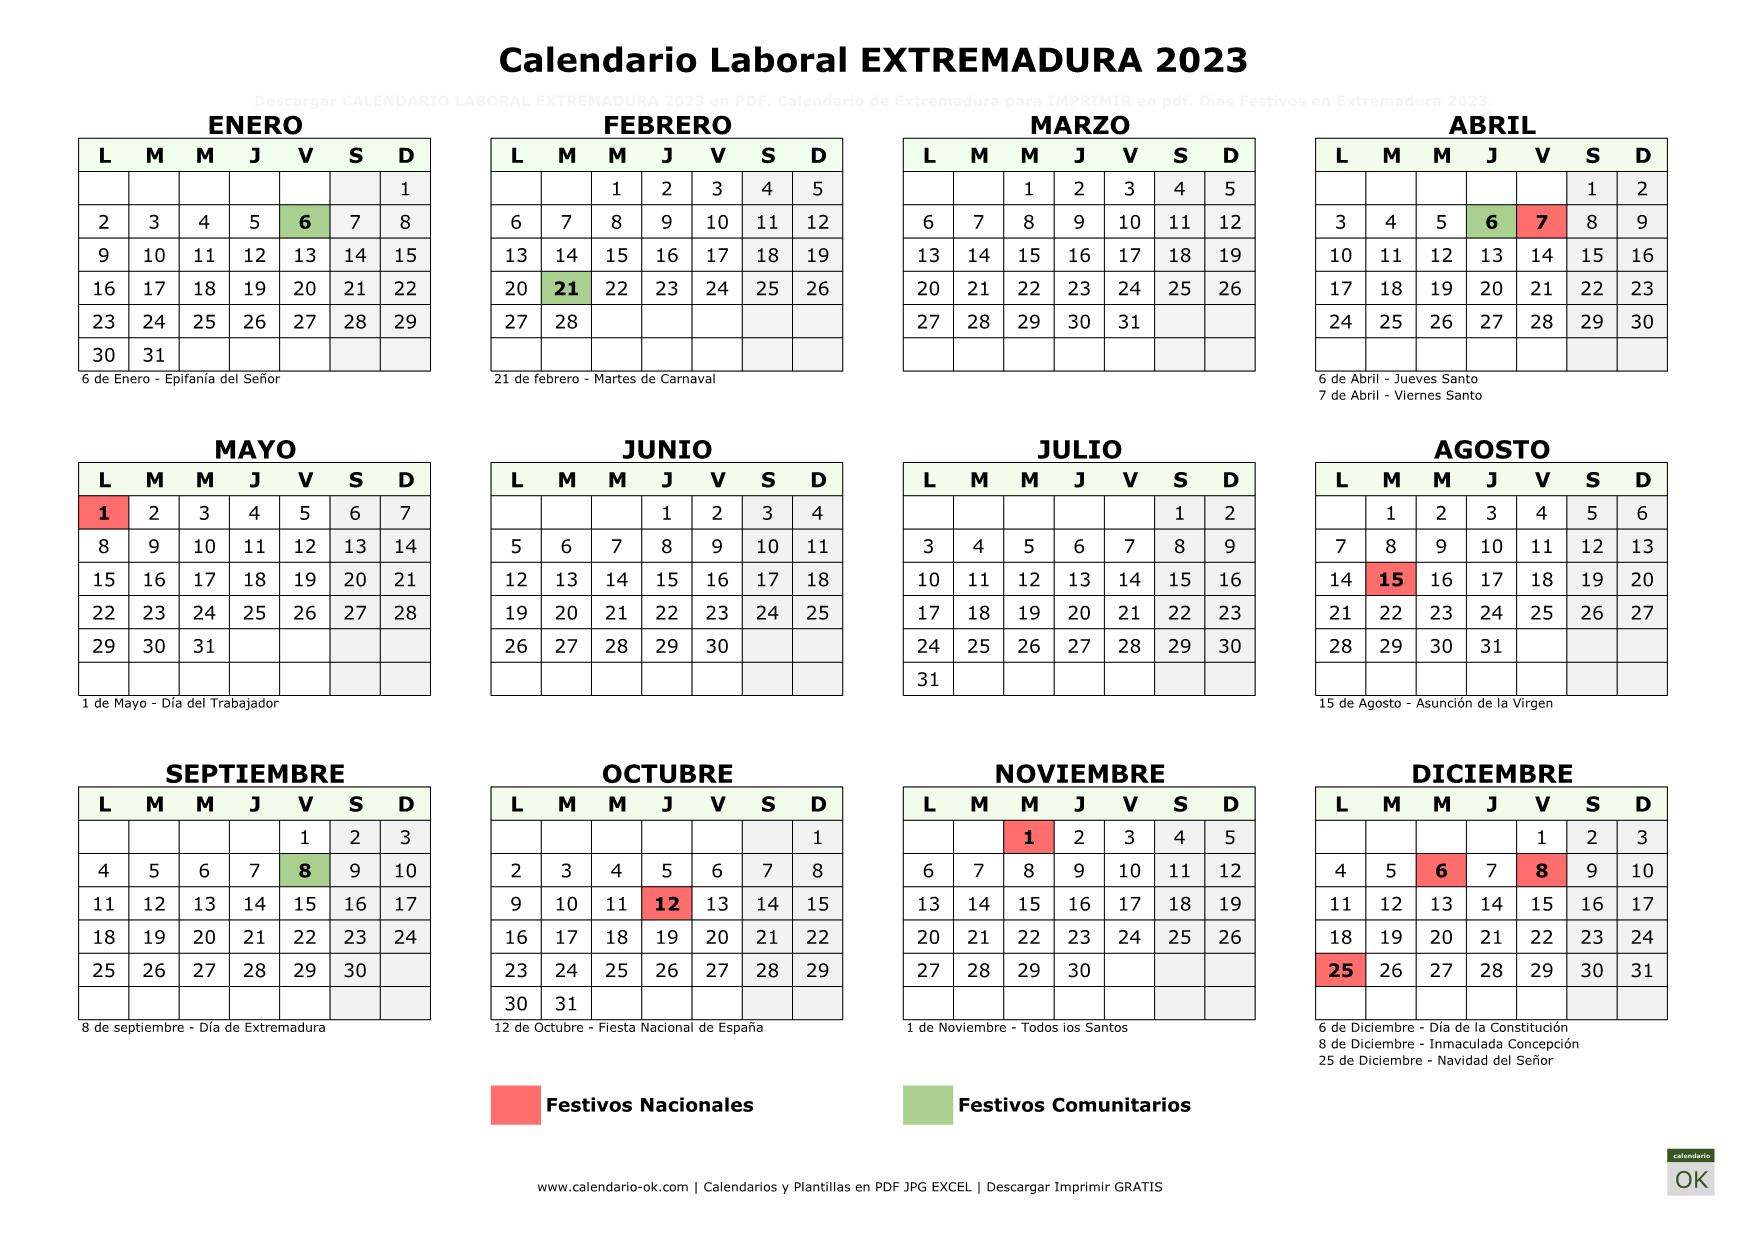 Calendario Laboral EXTREMADURA 2023 horizontal